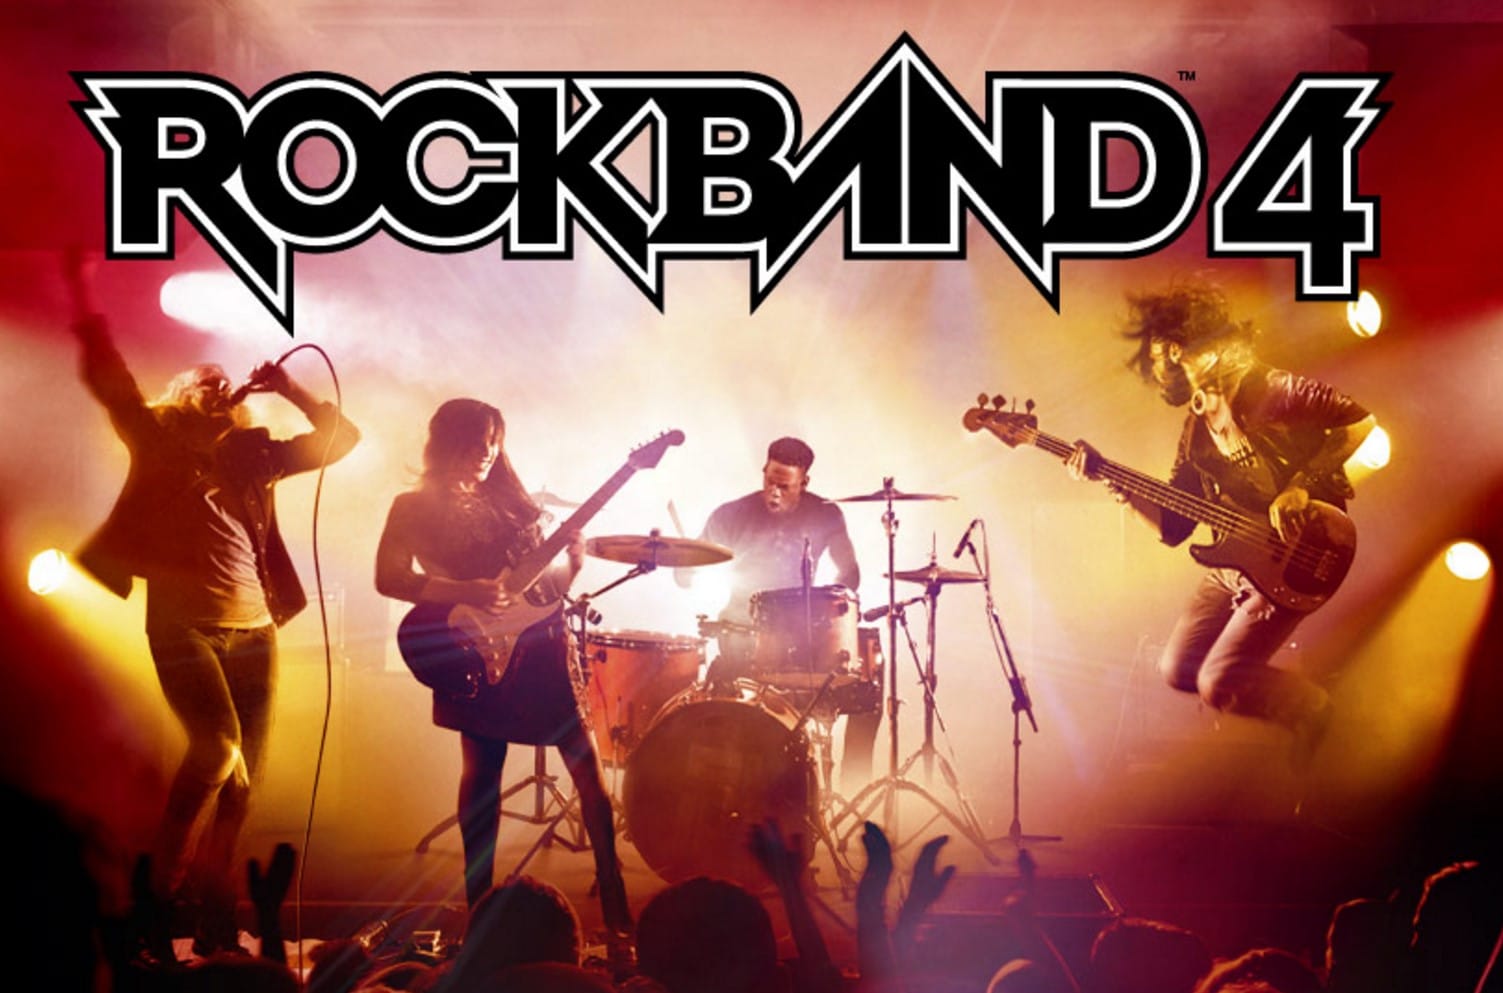 Rock Band 4 A New Era Of Rhythm Gaming Eteknix